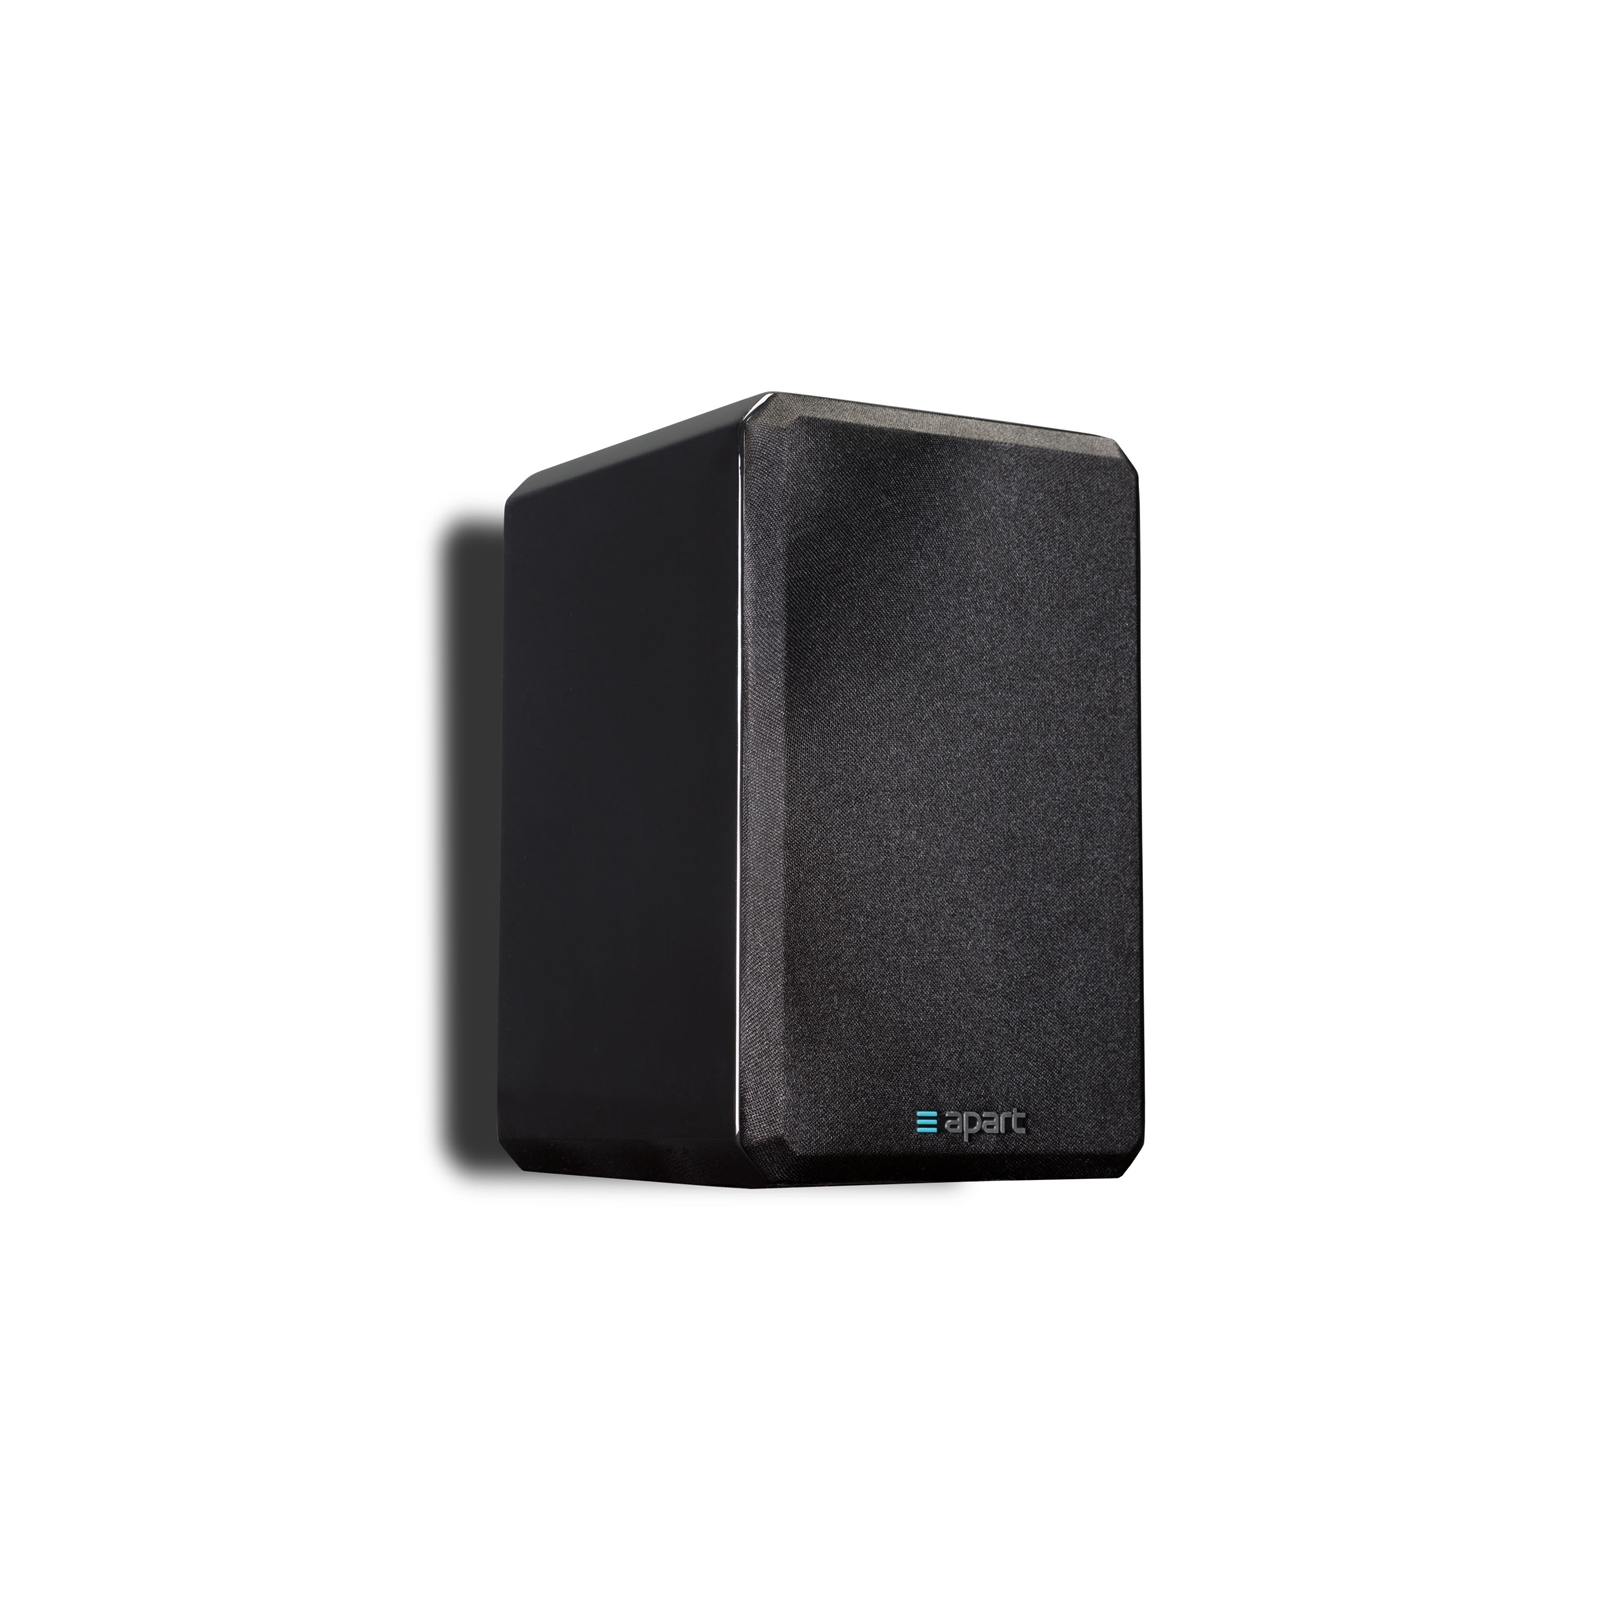 Apart HiFi speaker @ 16ohms, 120 watts, 4 inch, Glossy black. Price per piece, s